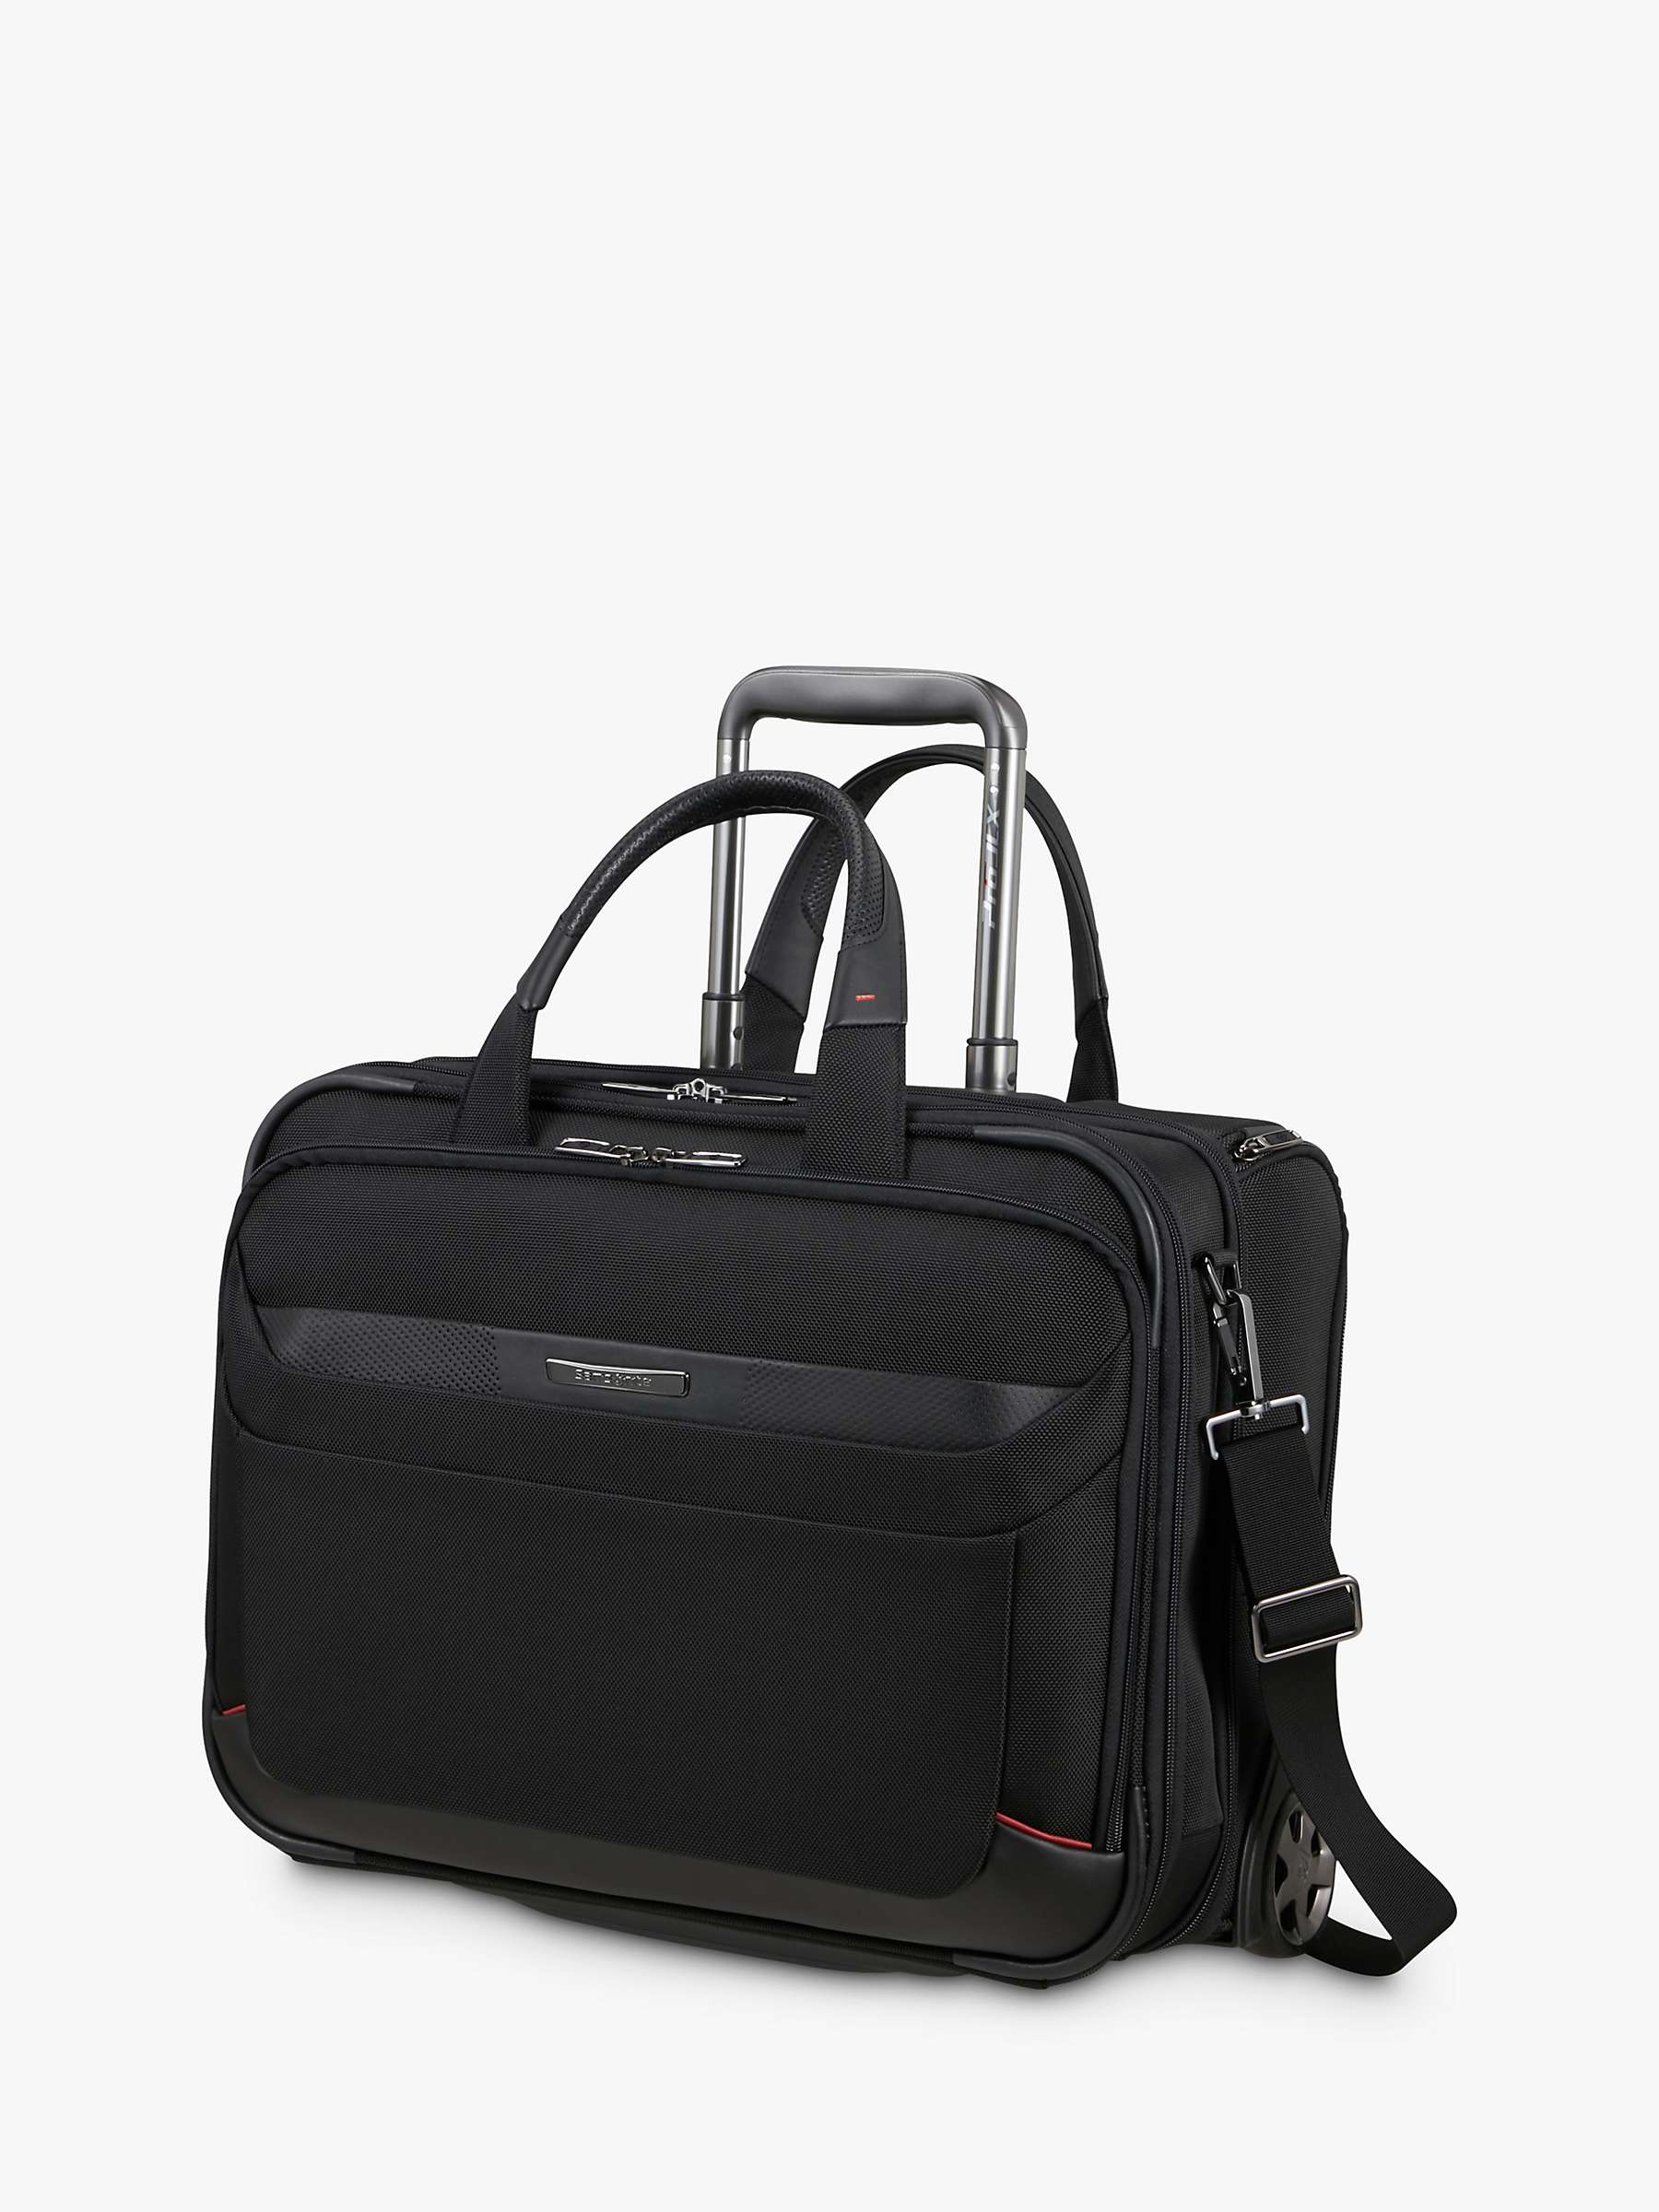 Buy Samsonite Pro-DLX 6 Rolling Laptop Briefcase, Black Online at johnlewis.com